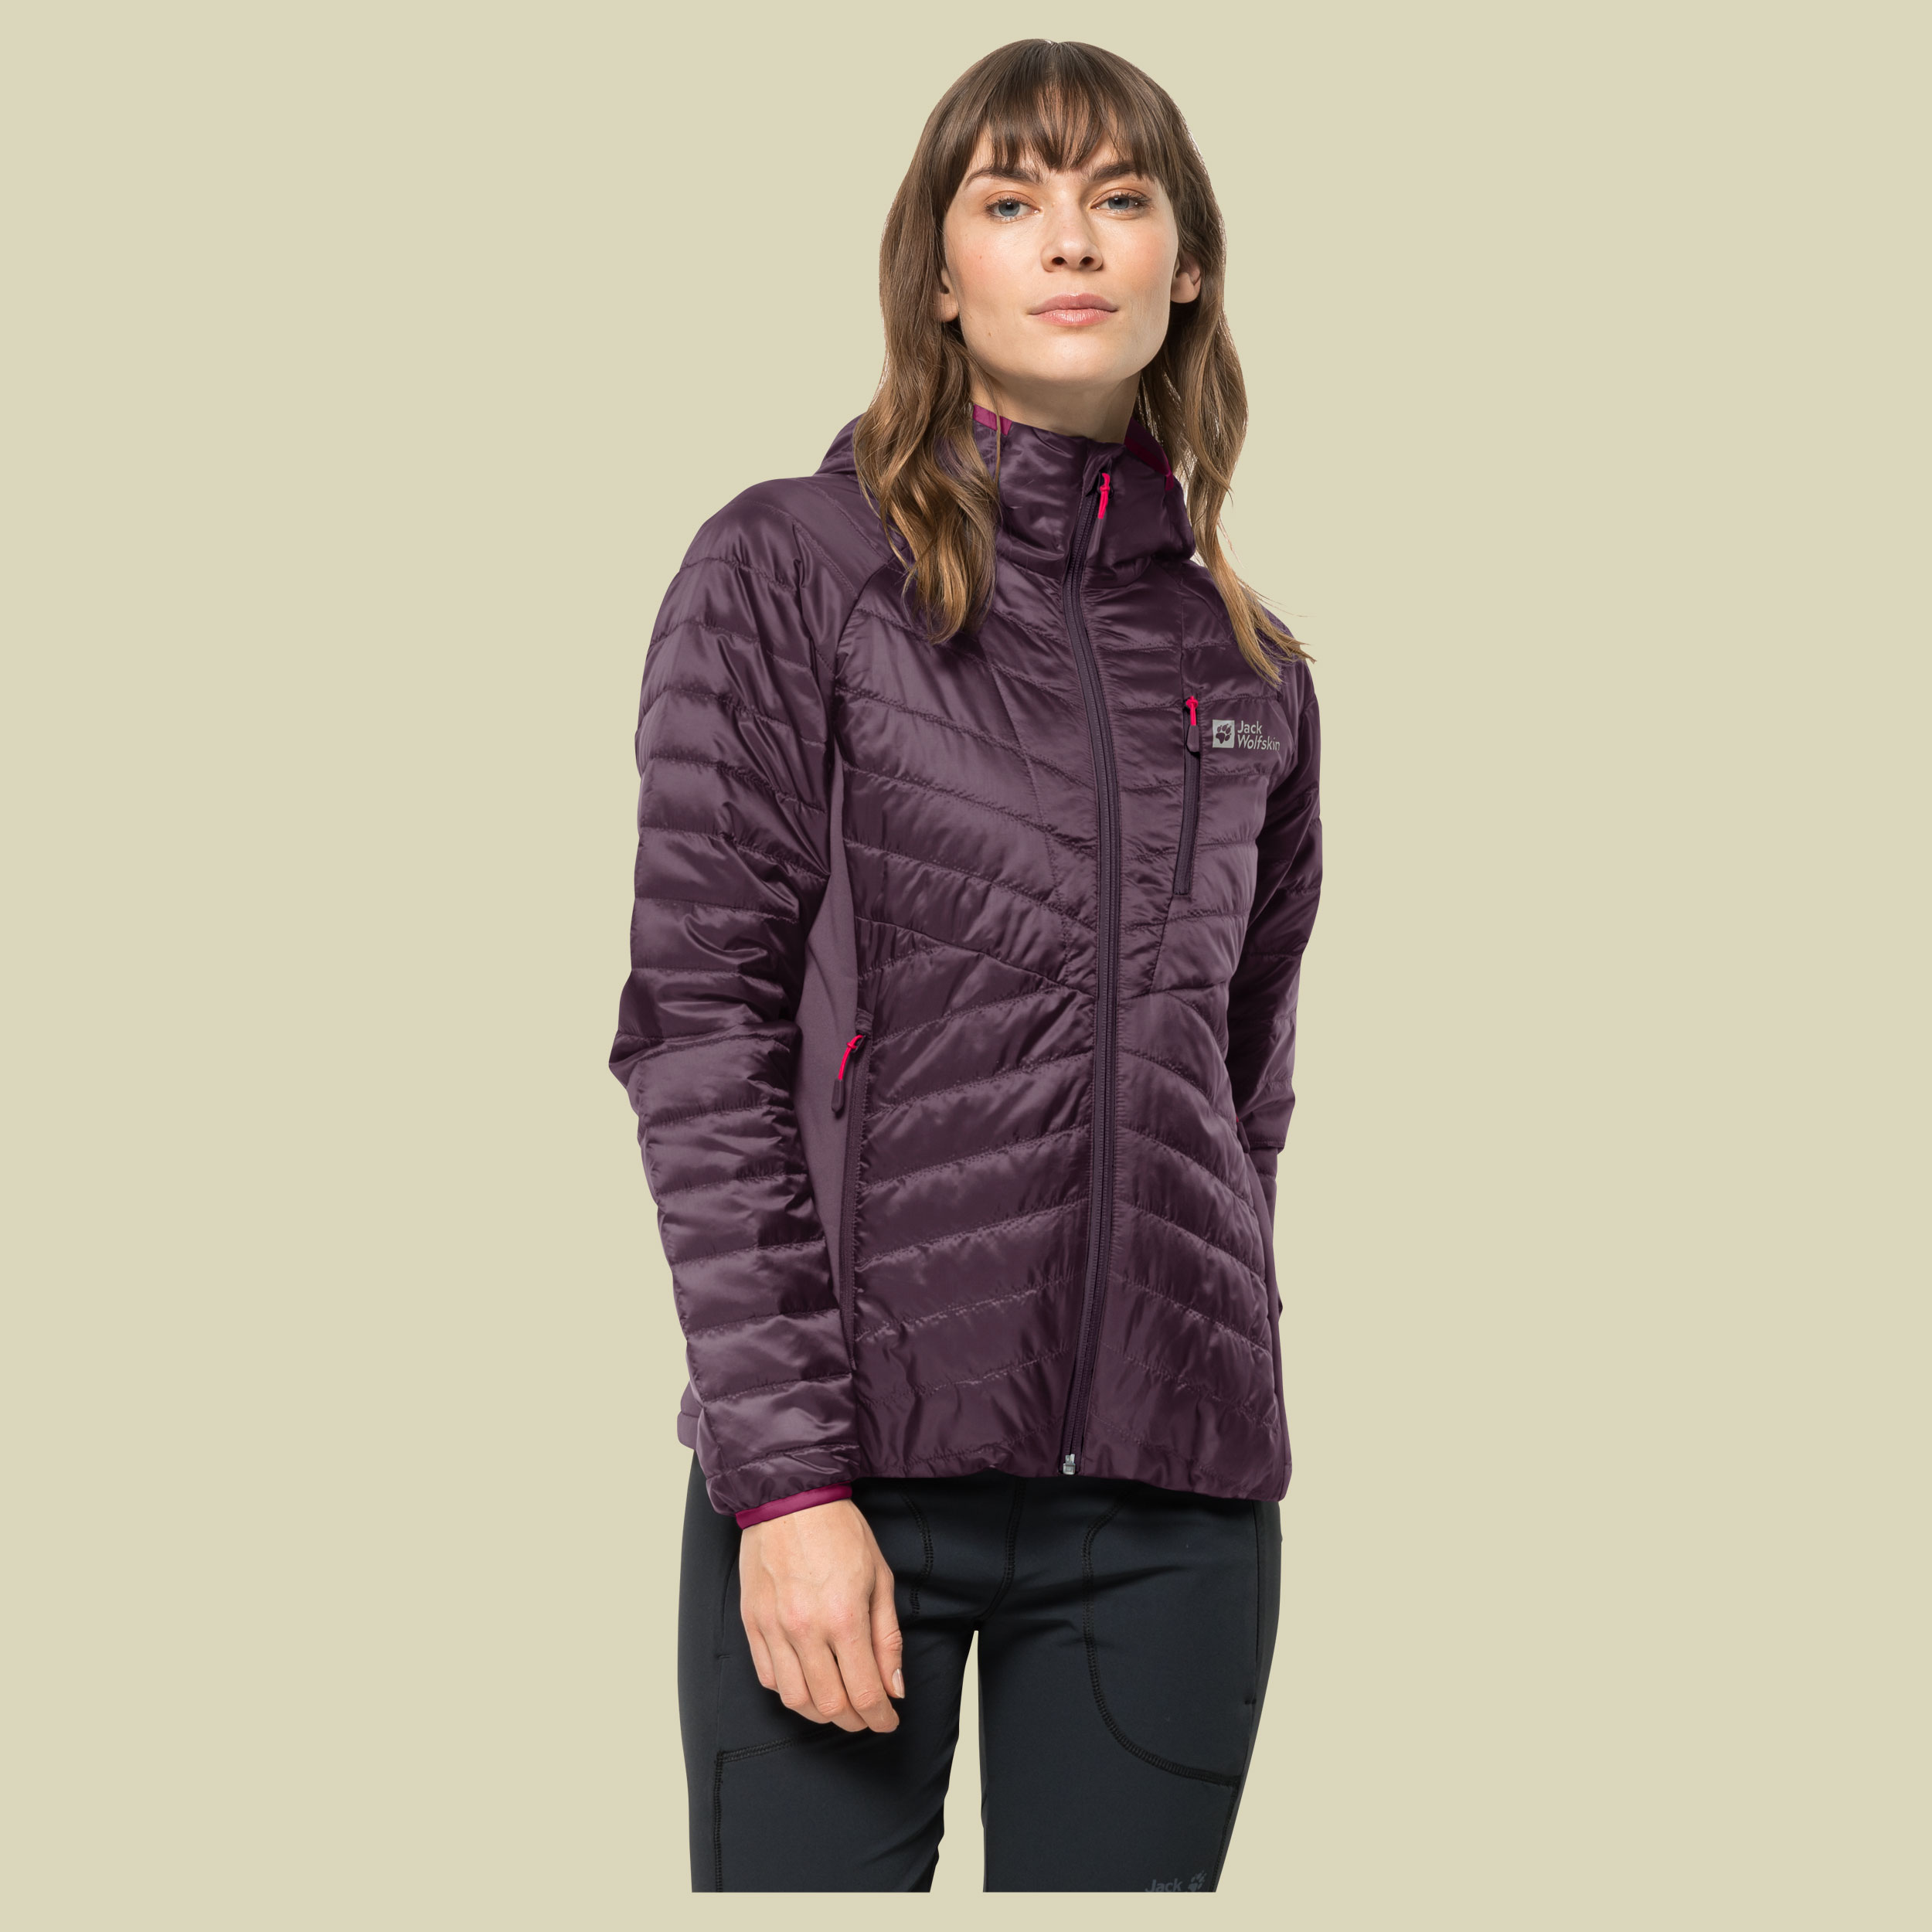 Routeburn Pro Ins Jacket Women Größe XL Farbe grapevine